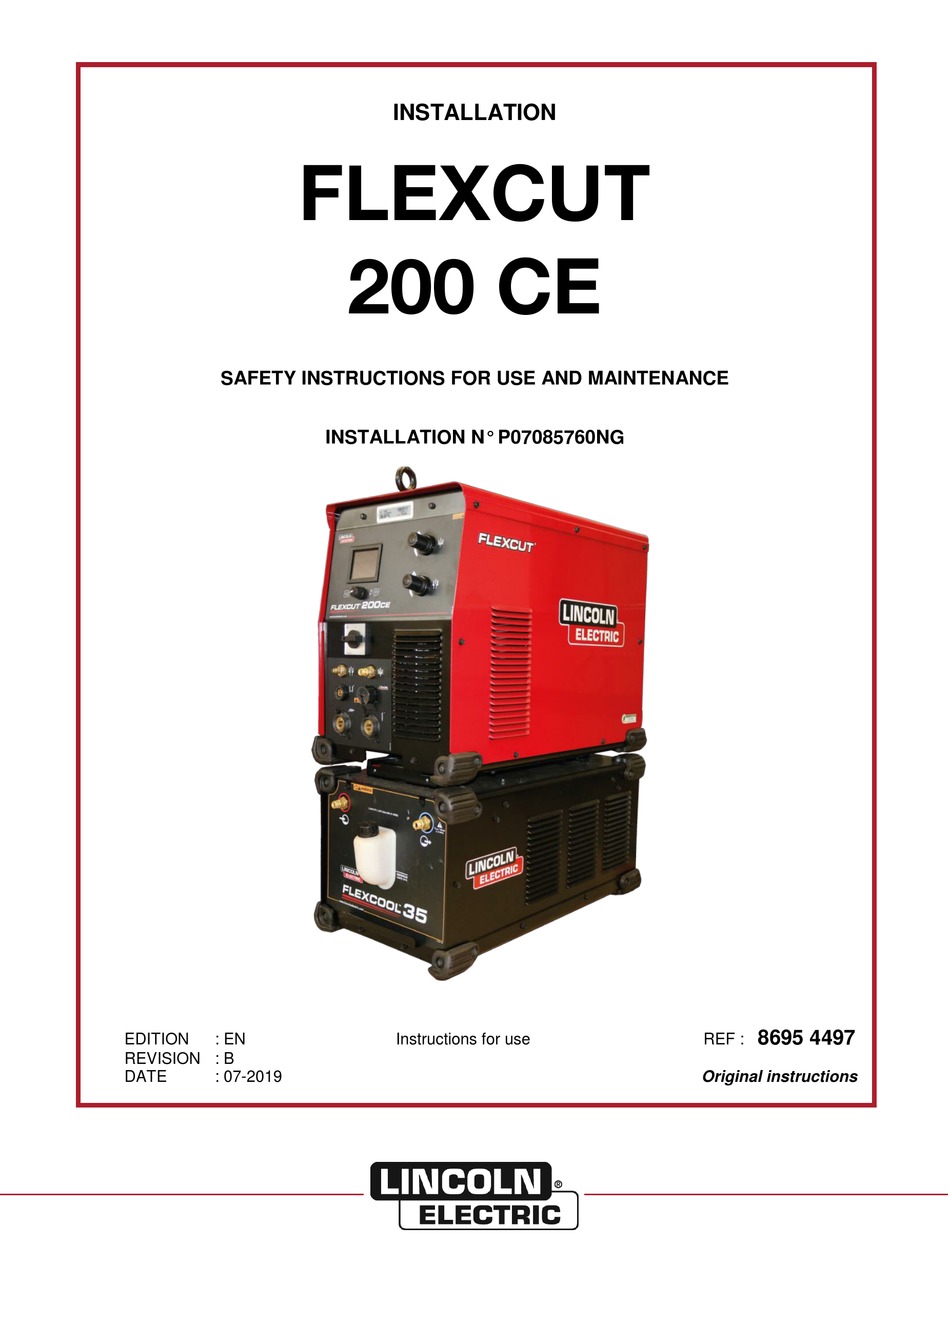 LINCOLN ELECTRIC FLEXCUT 200 CE MANUAL Pdf Download | ManualsLib